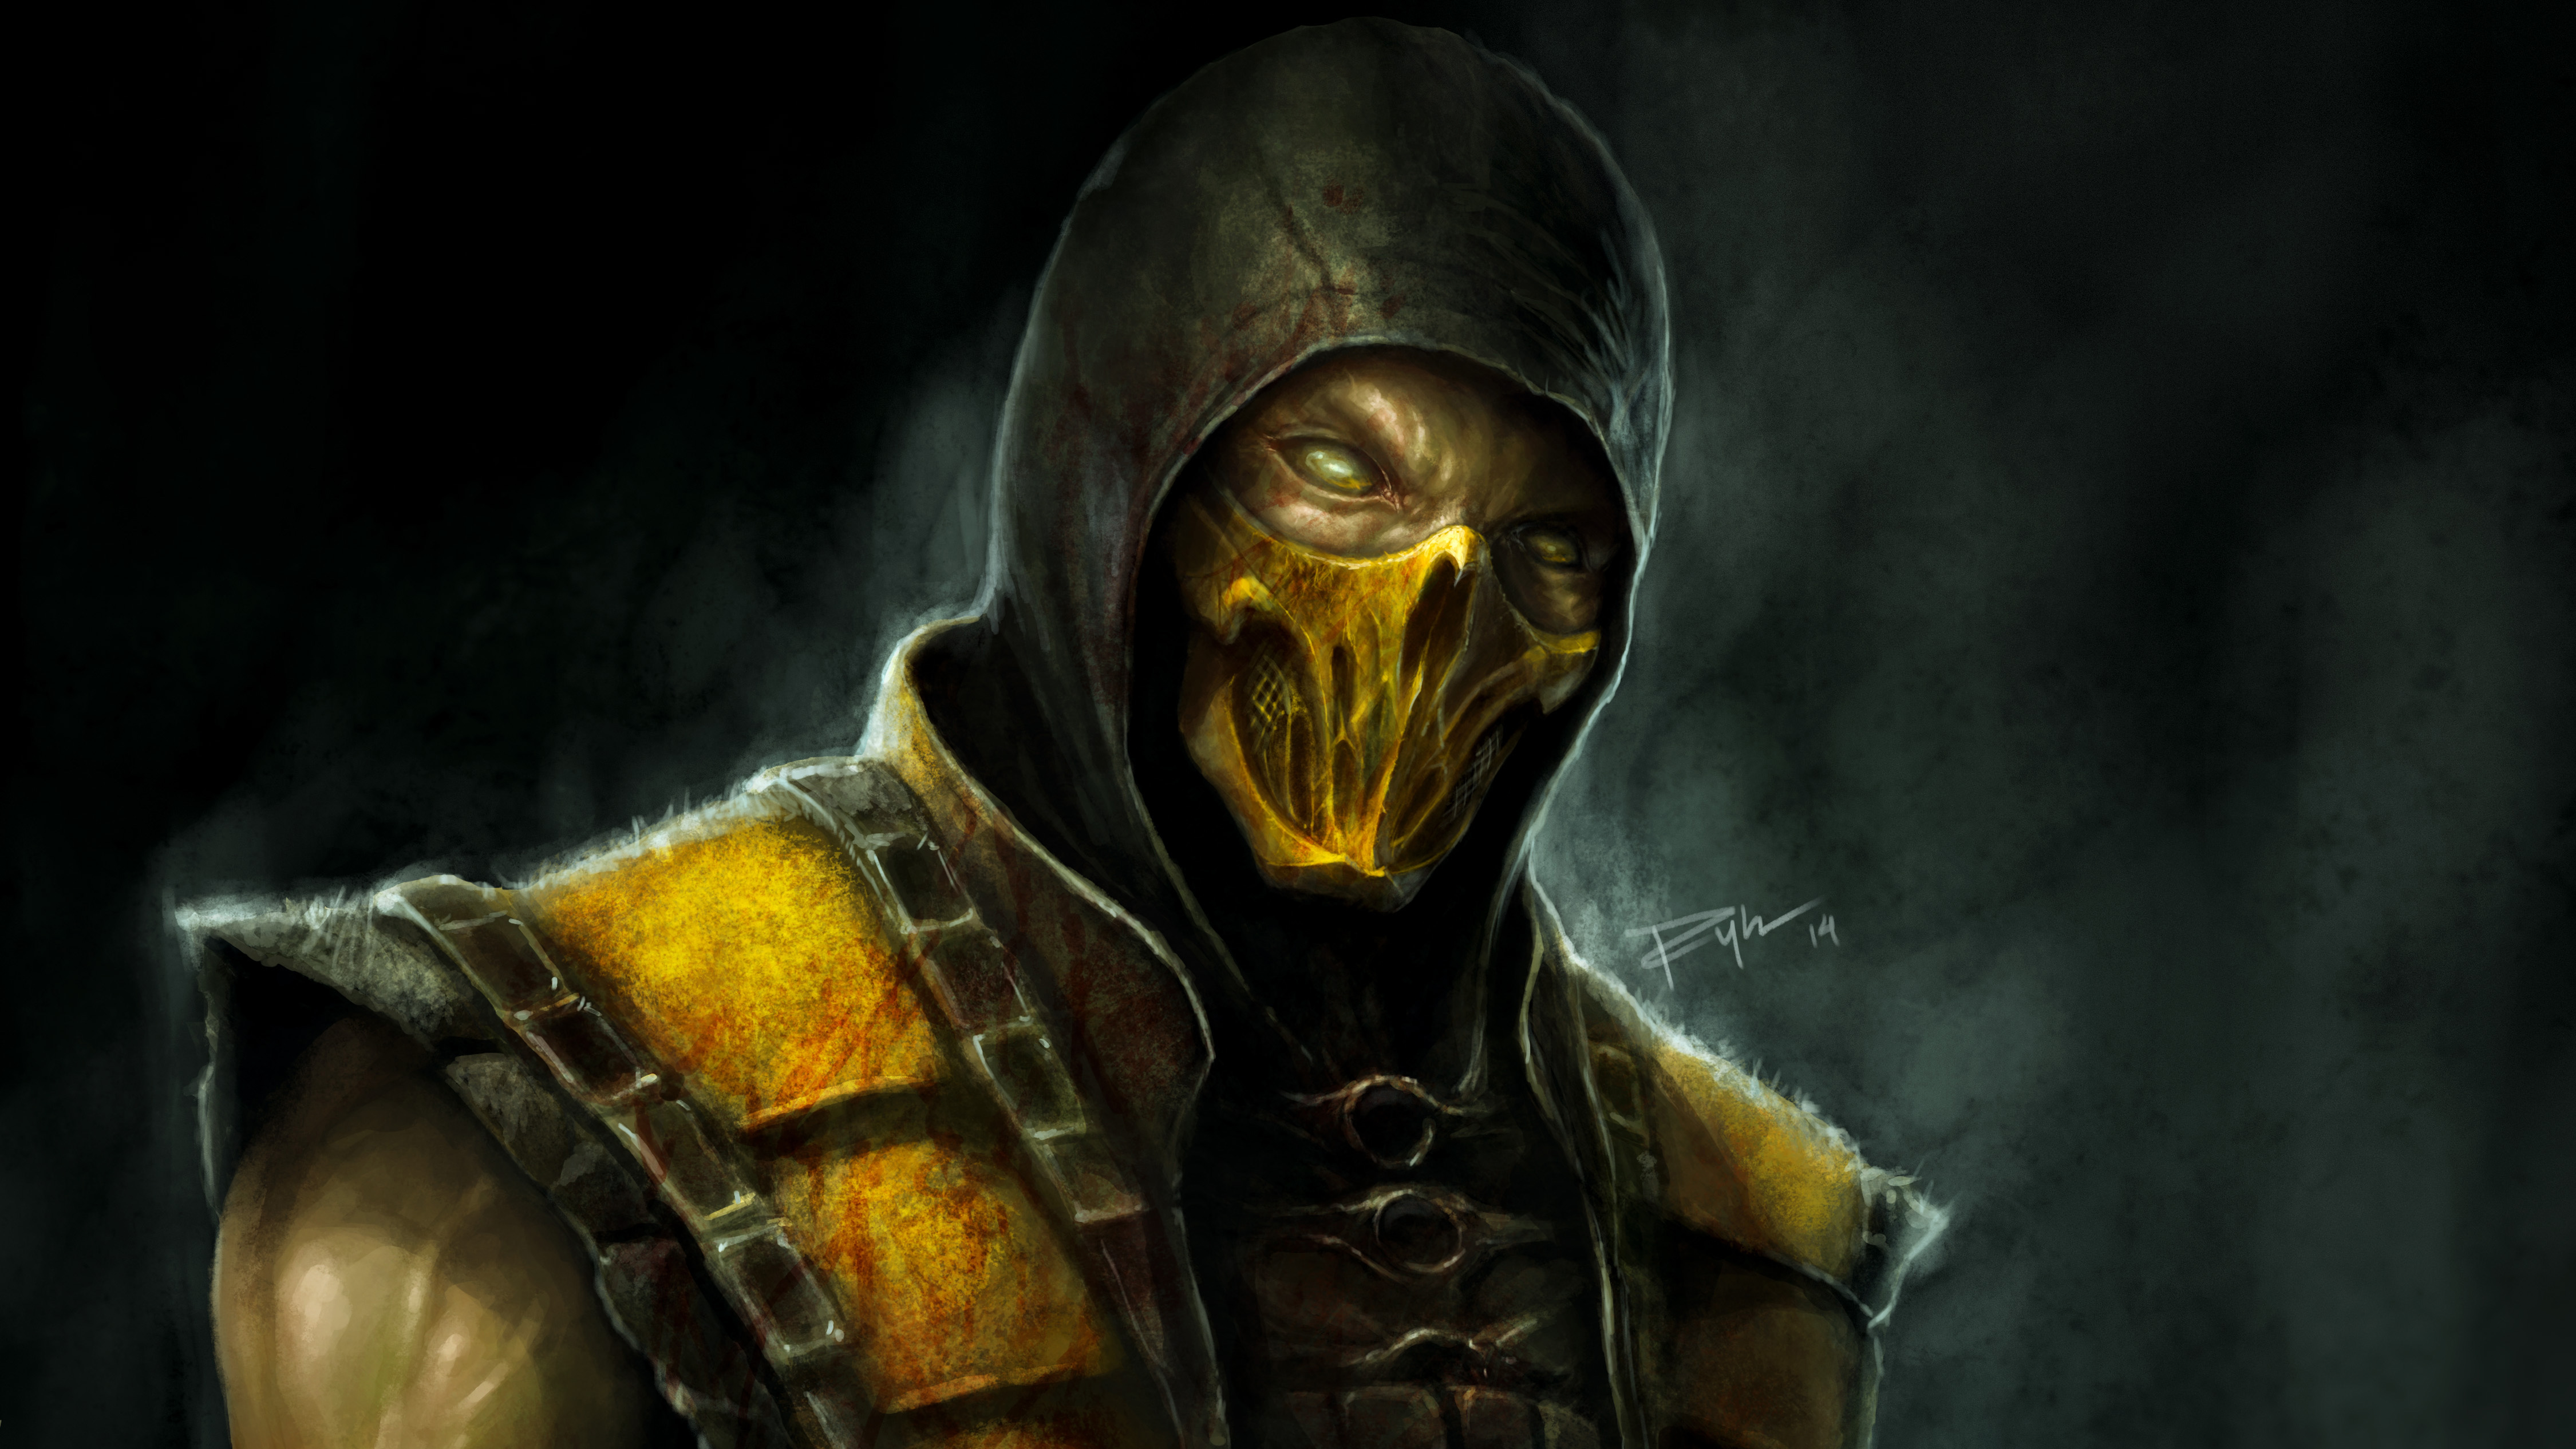 Scorpion Mortal Kombat X 4k Artwork, HD Games, 4k Wallpaper, Image, Background, Photo and Picture